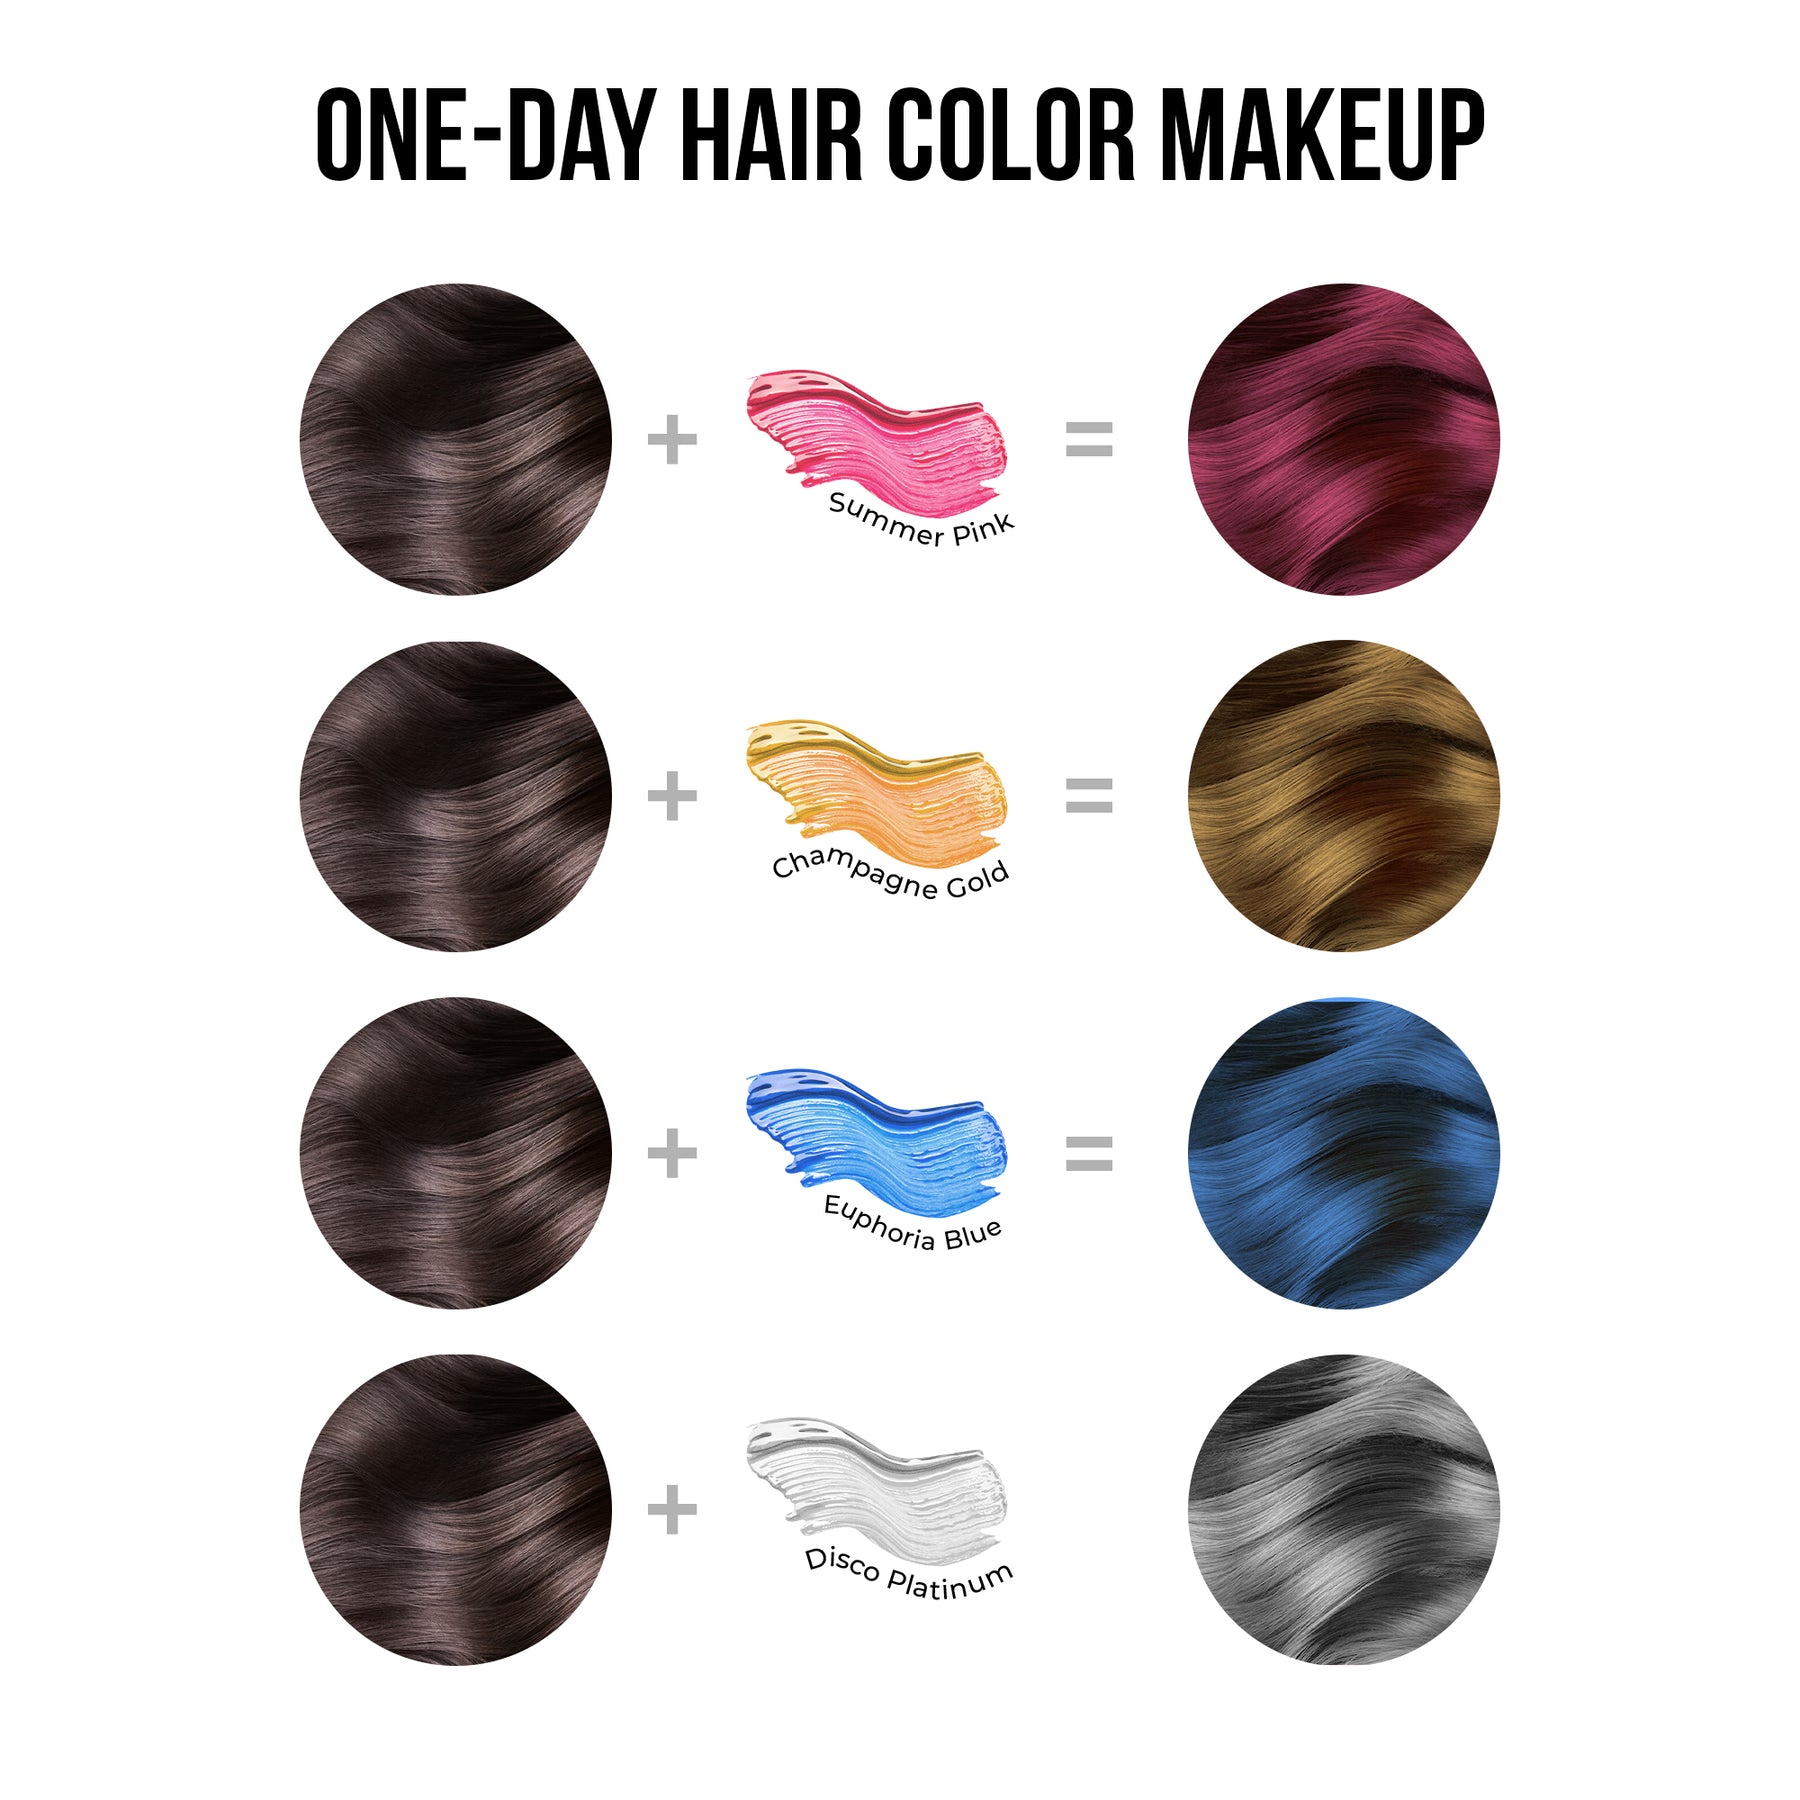 Colorisma Temporary 1-Wash Hair Color Makeup